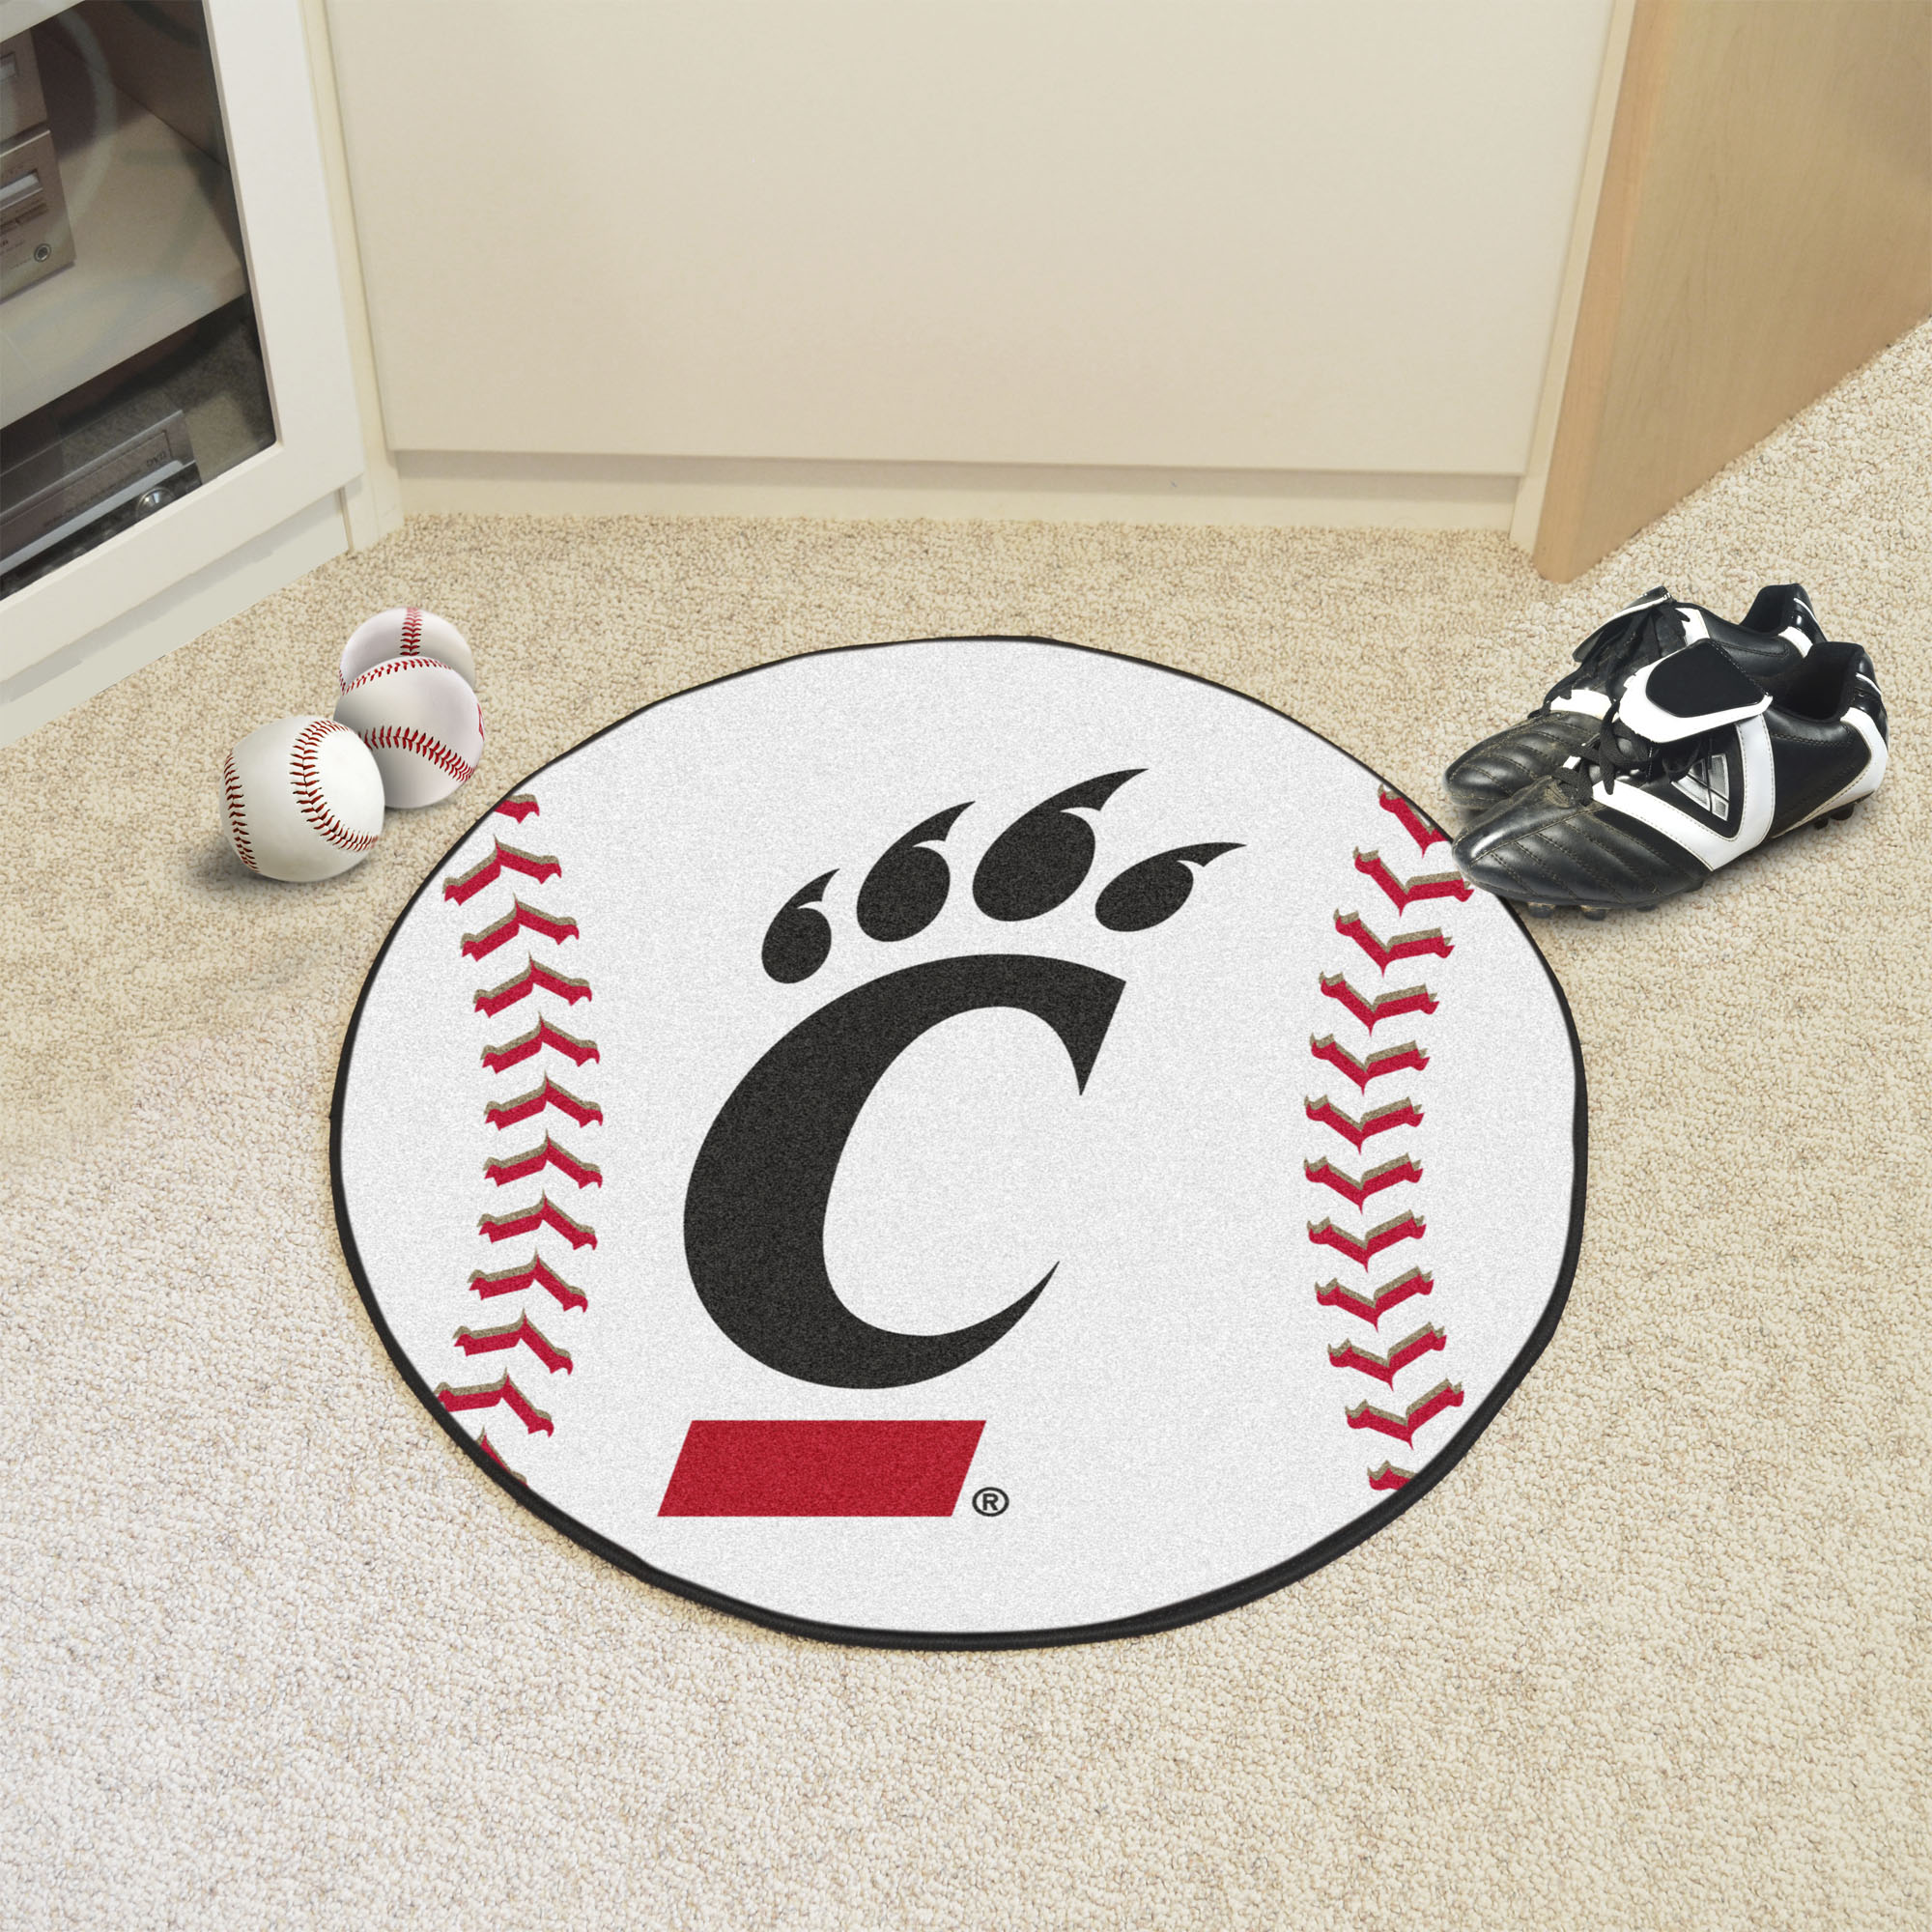 University of Cincinnati Ball Shaped Area Rugs (Ball Shaped Area Rugs: Baseball)